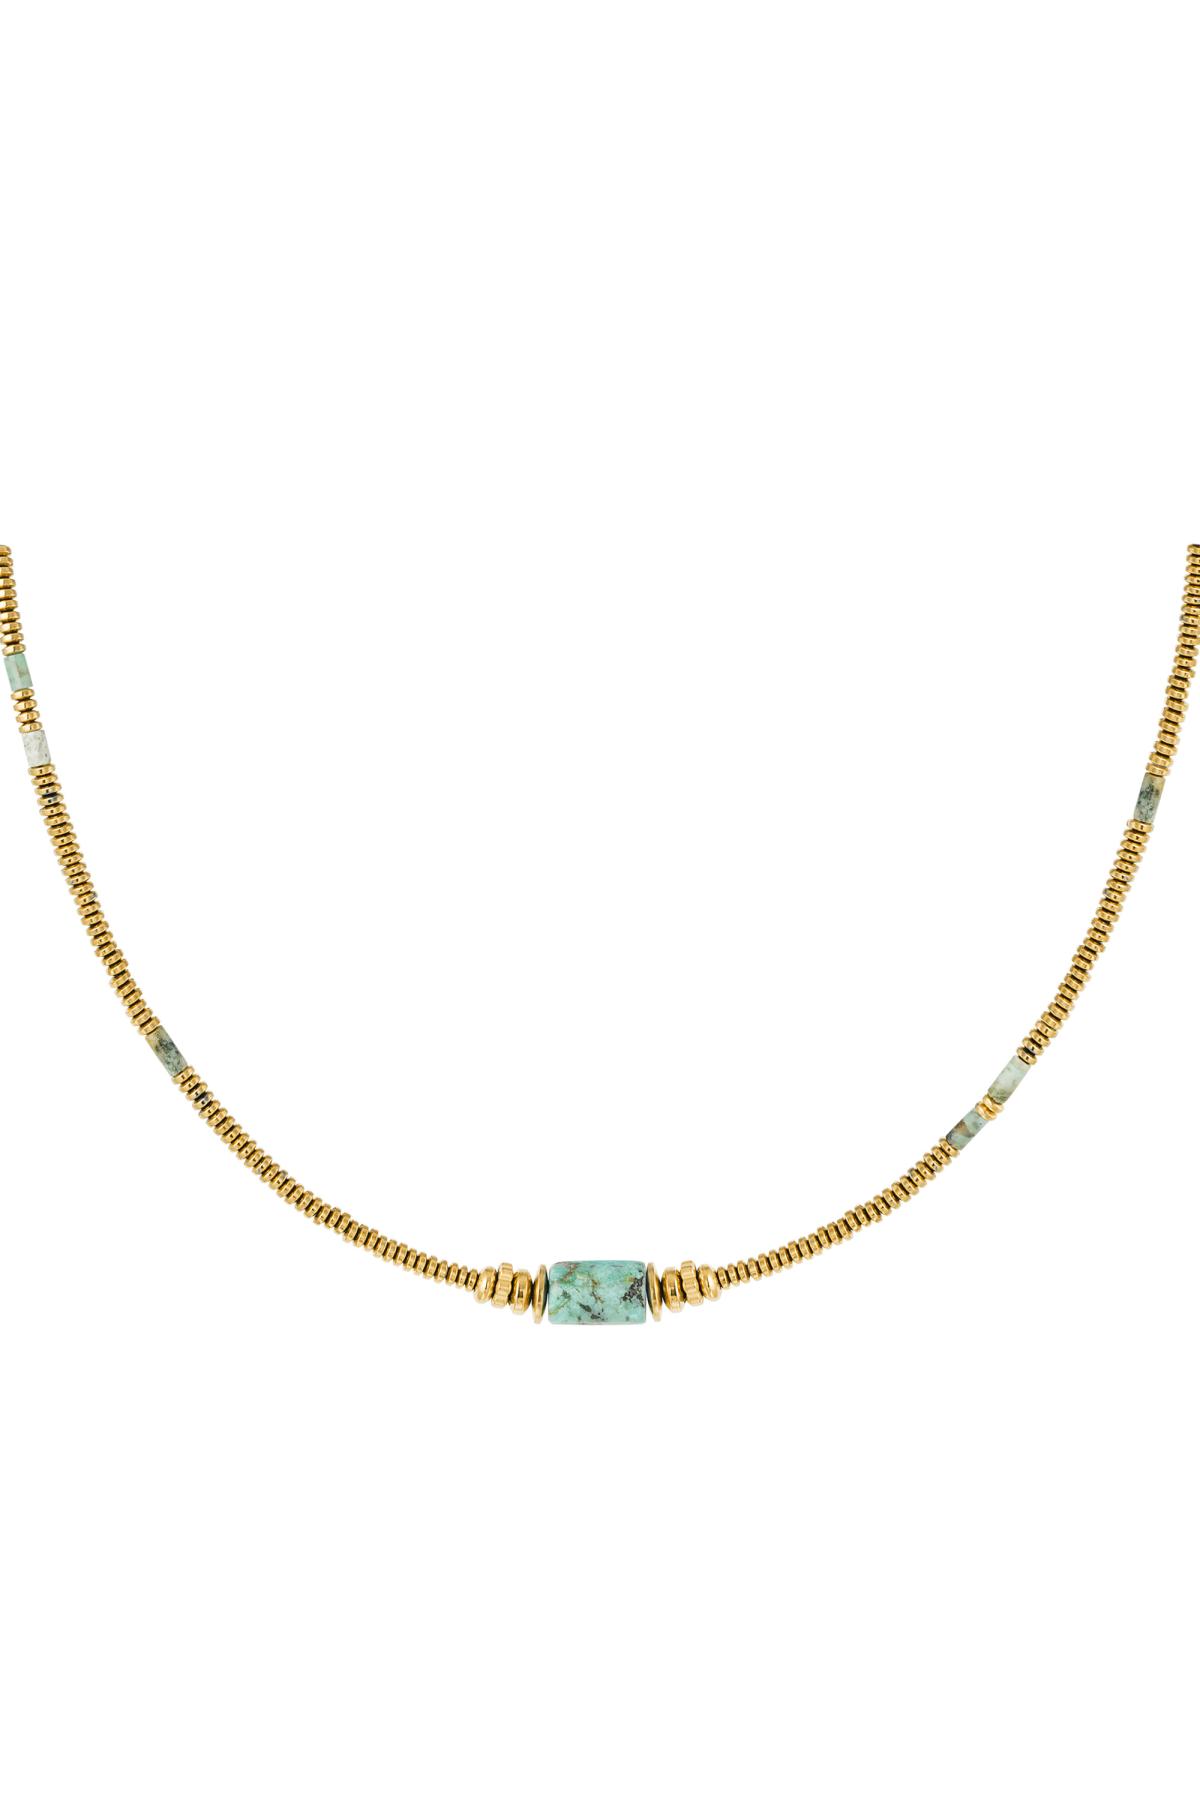 Halskette aus dünnen Perlen mit Anhänger - Kollektion Natural Stones Grün & Gold Edelstahl h5 